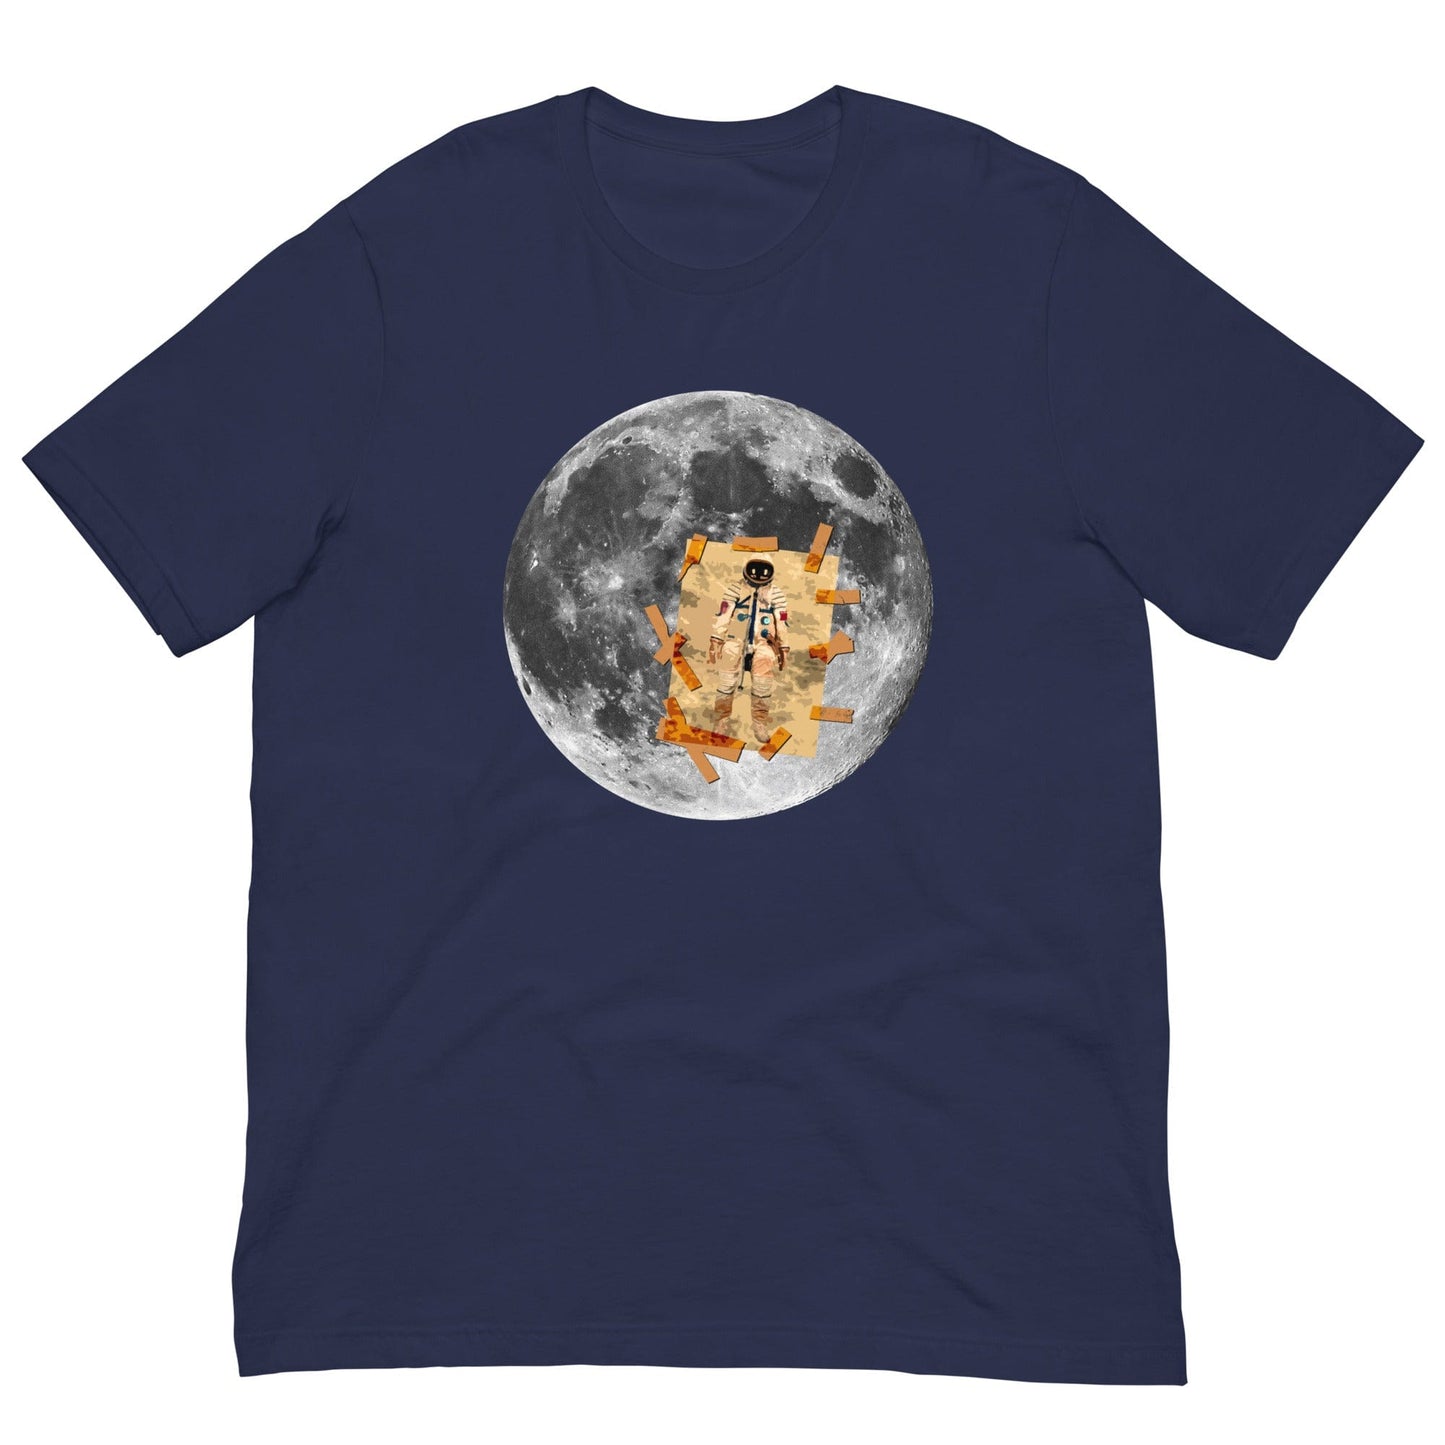 Man on the Moon T-shirt Navy / XS